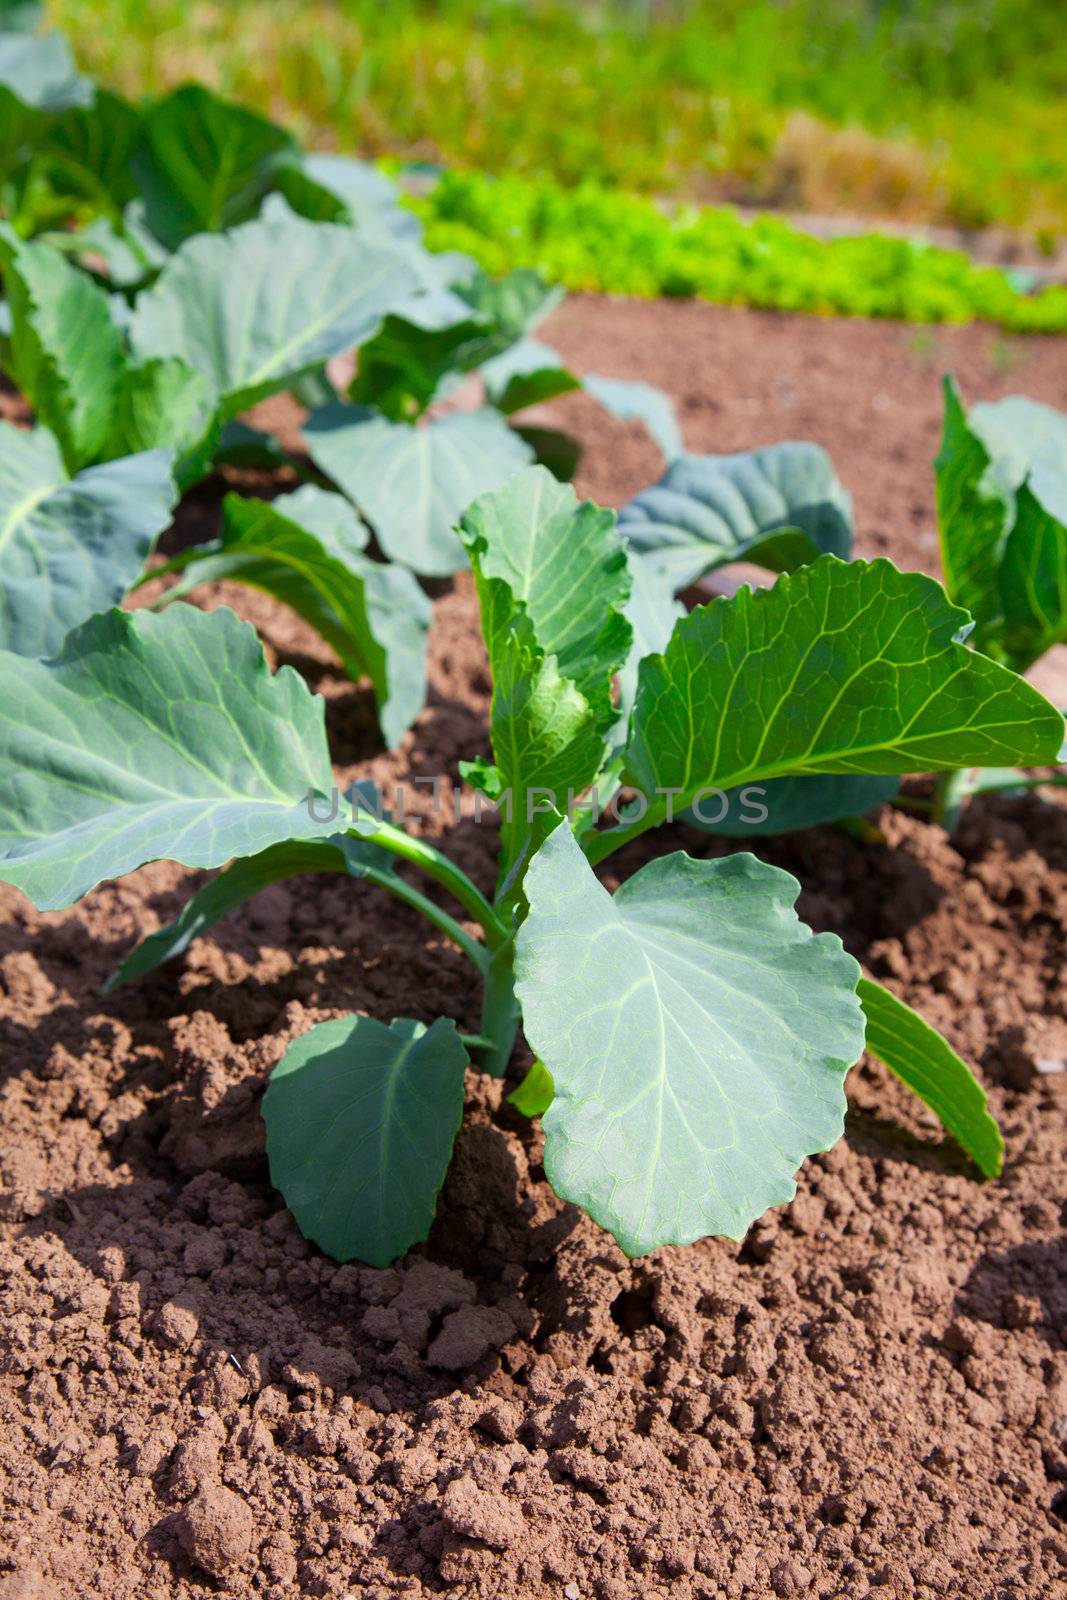 cabbage in the vegetable garden by motorolka